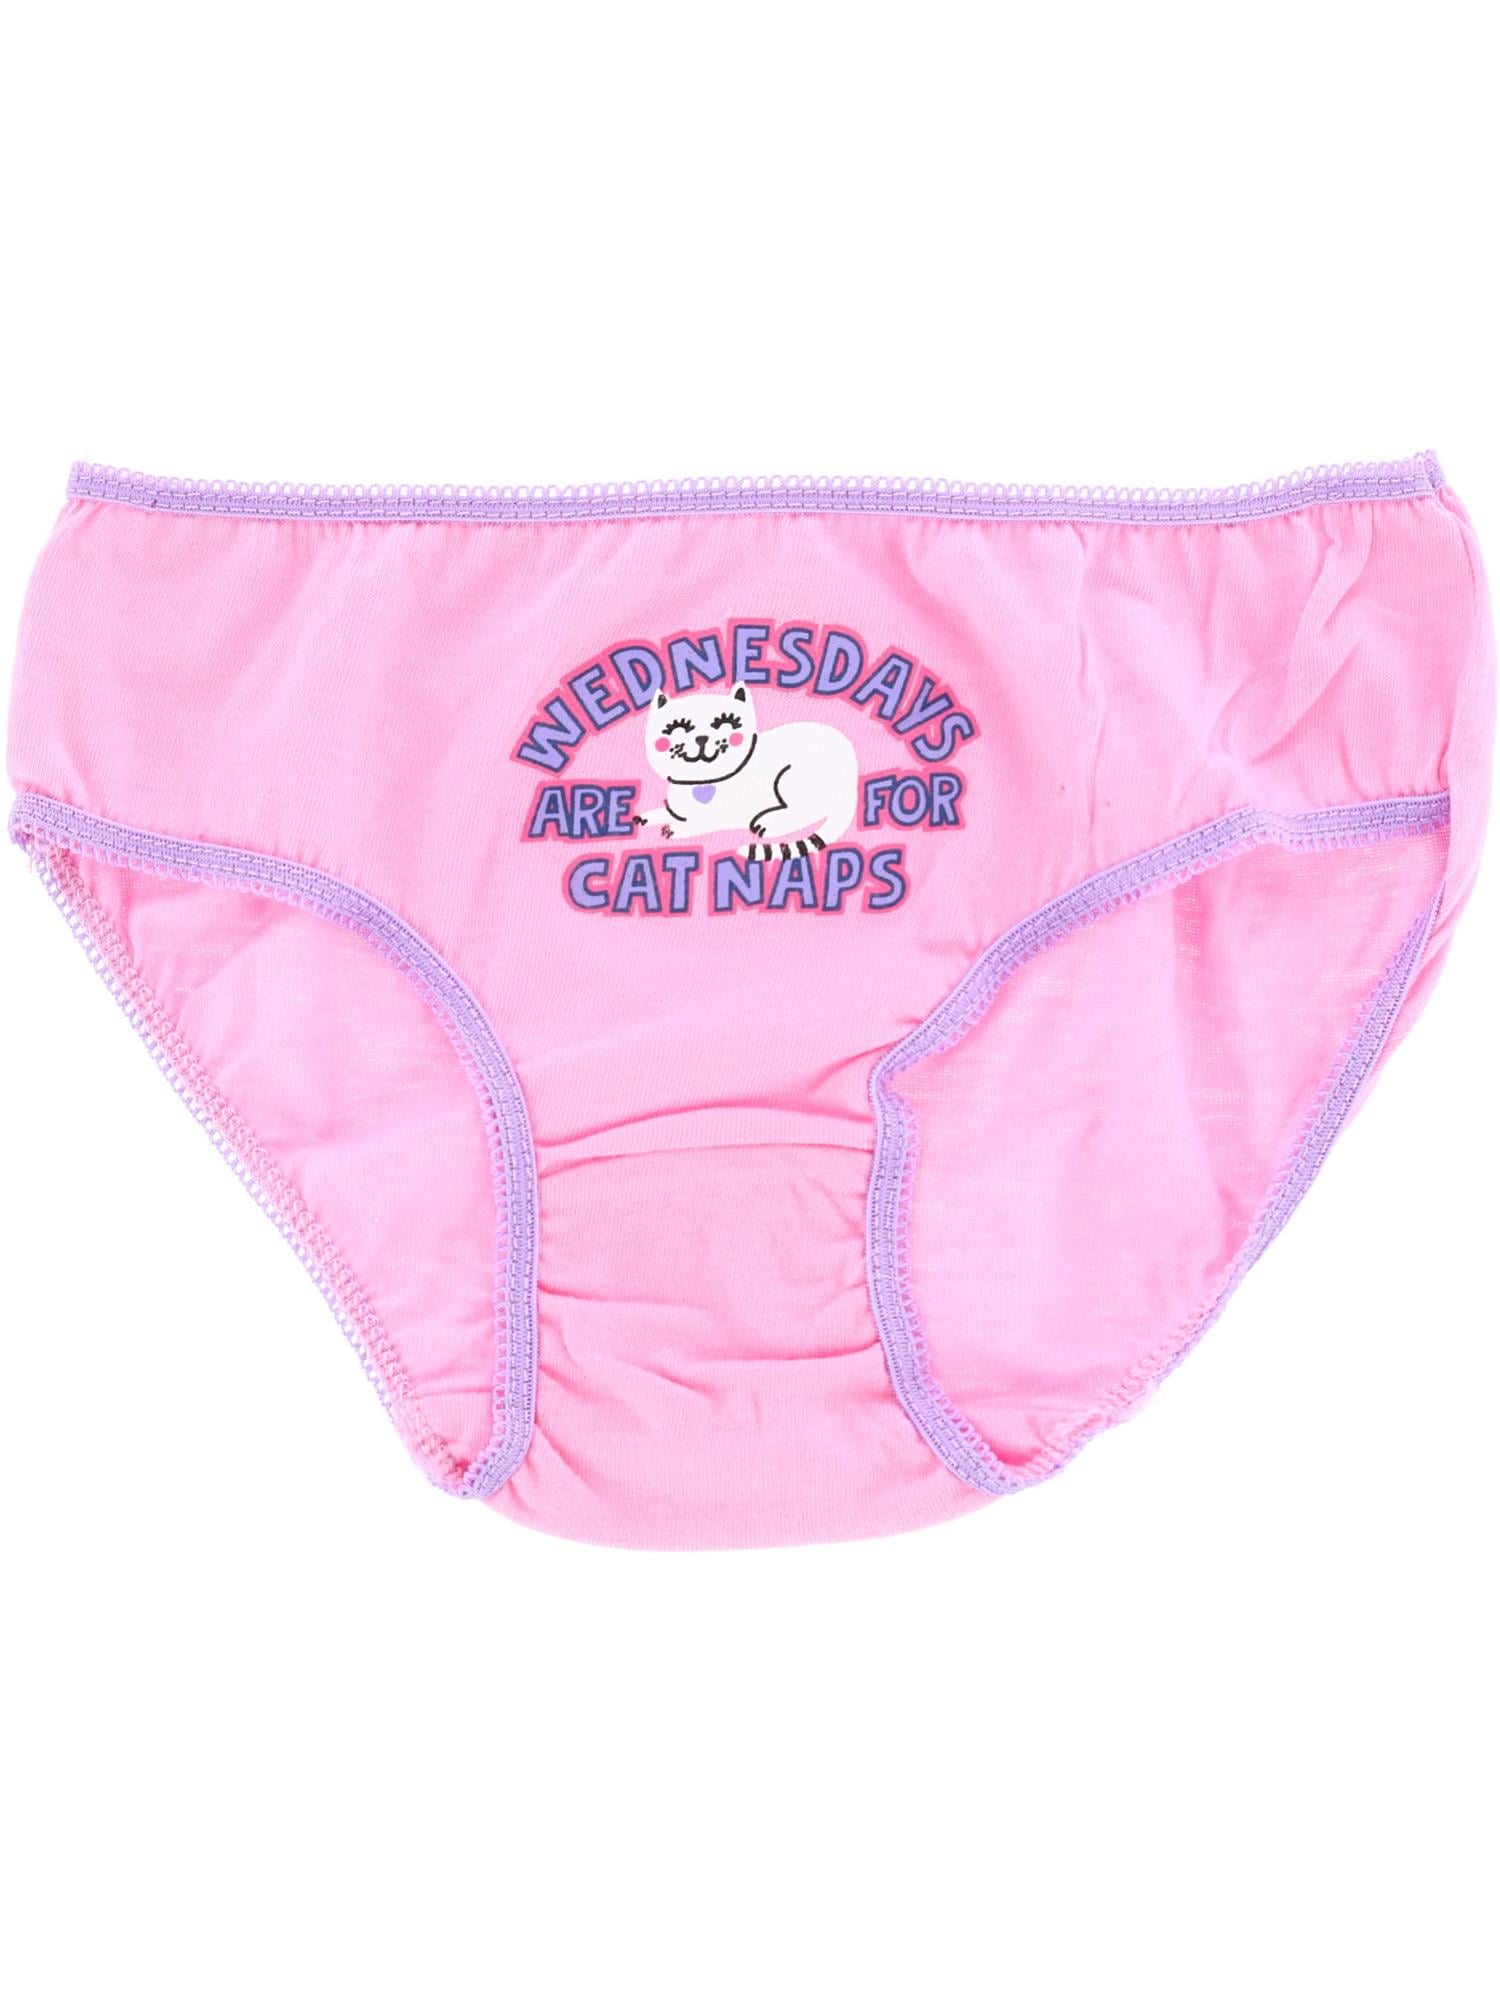 Rene Rofe Girls' Amber Bikini Panty - 7 Pack, Multi, Large (10/12) 